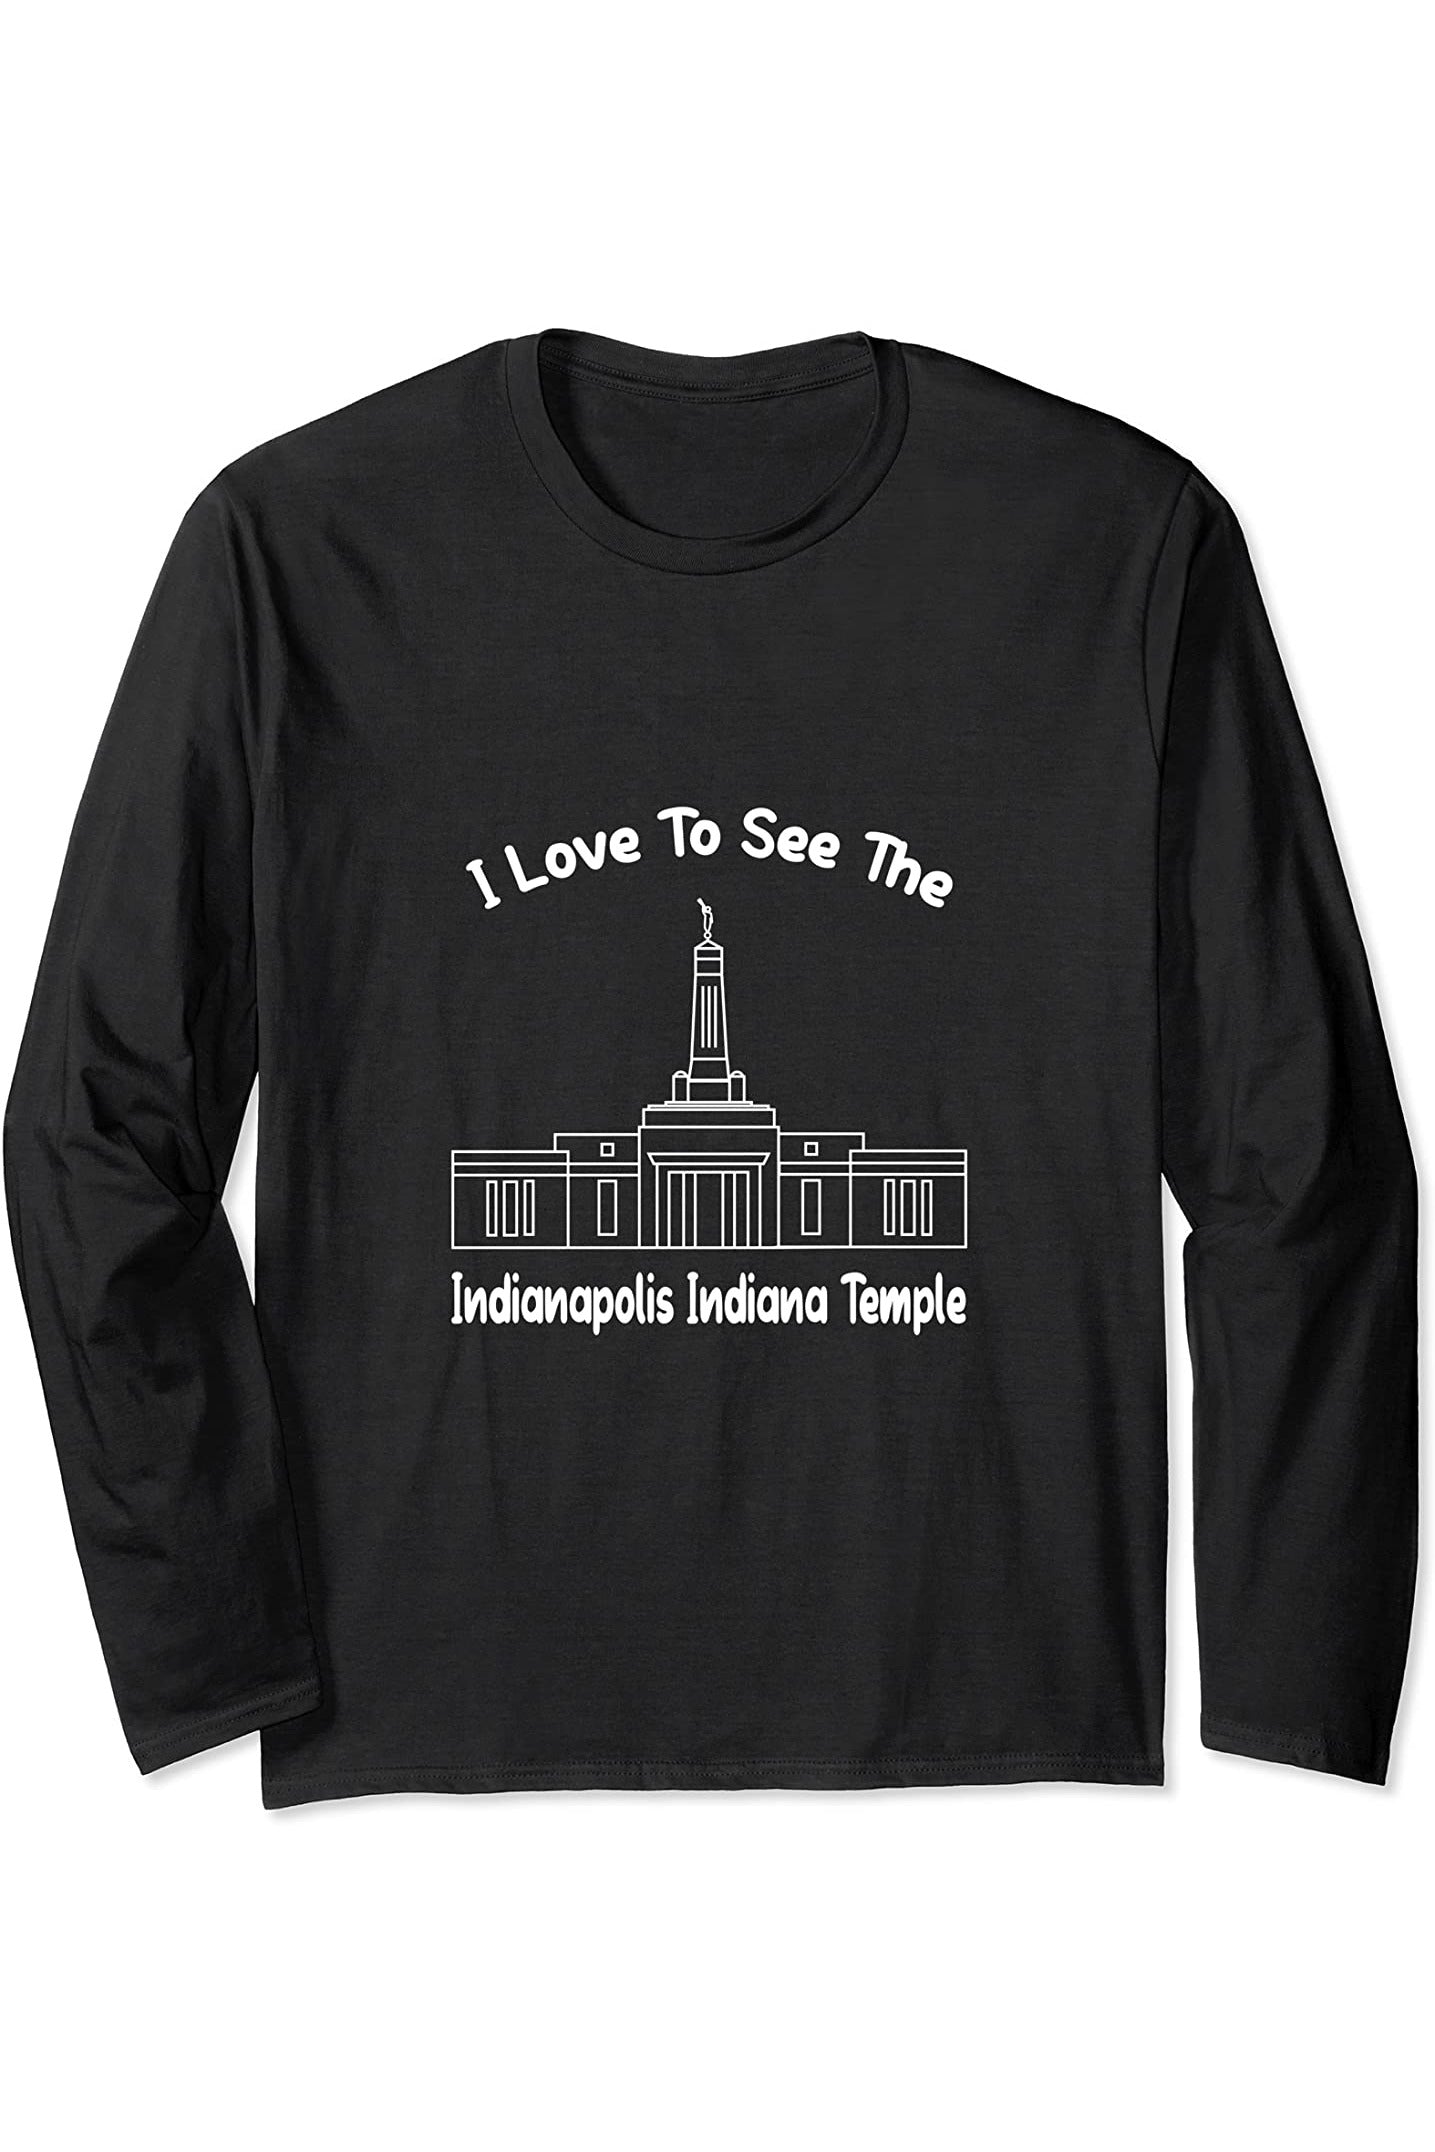 Indianapolis Indiana Temple Long Sleeve T-Shirt - Primary Style (English) US